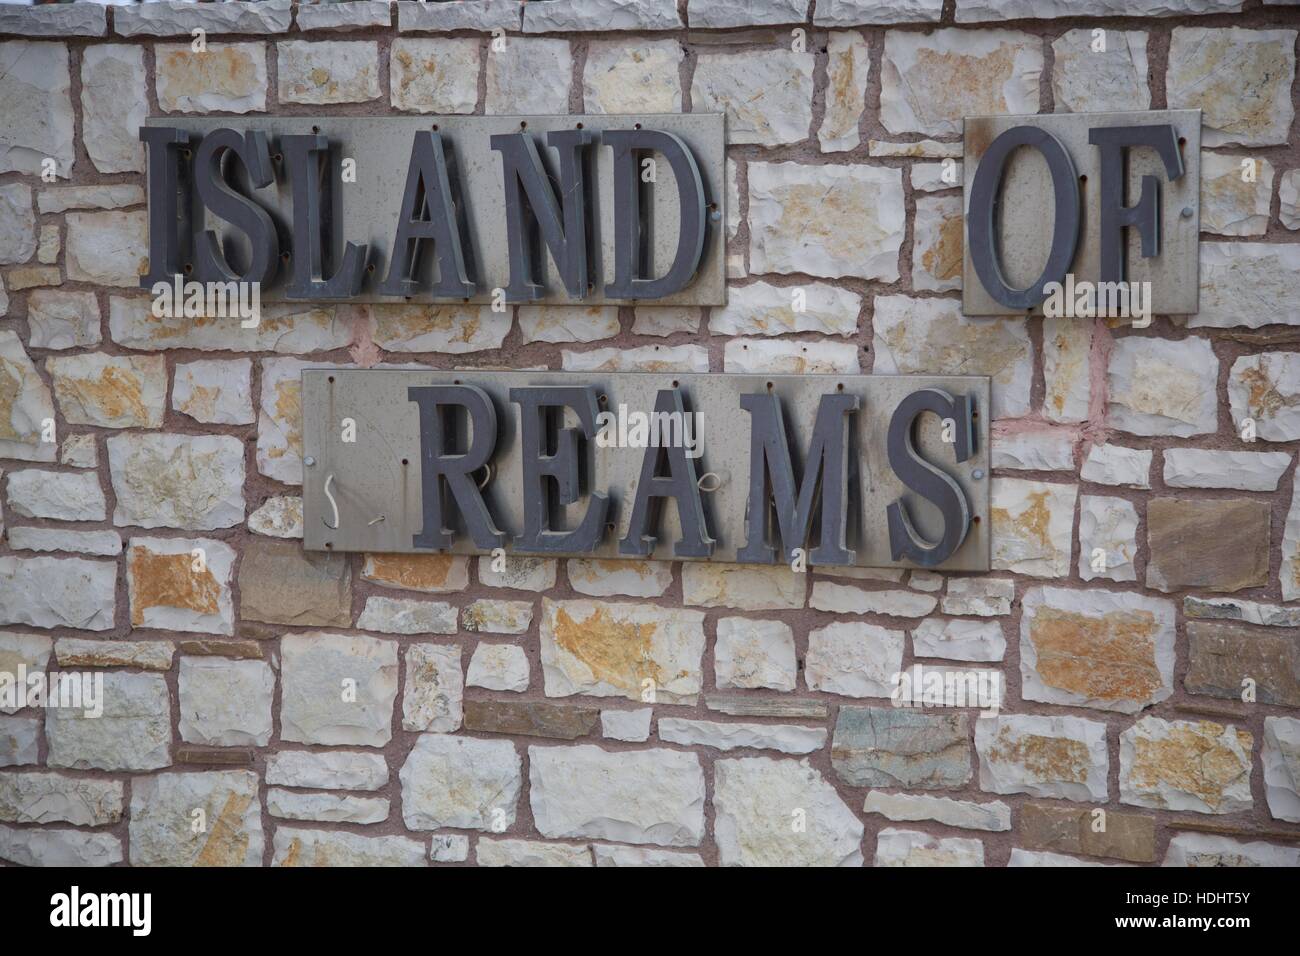 Island of Dreams, a derelict resort in Limni Greece Stock Photo